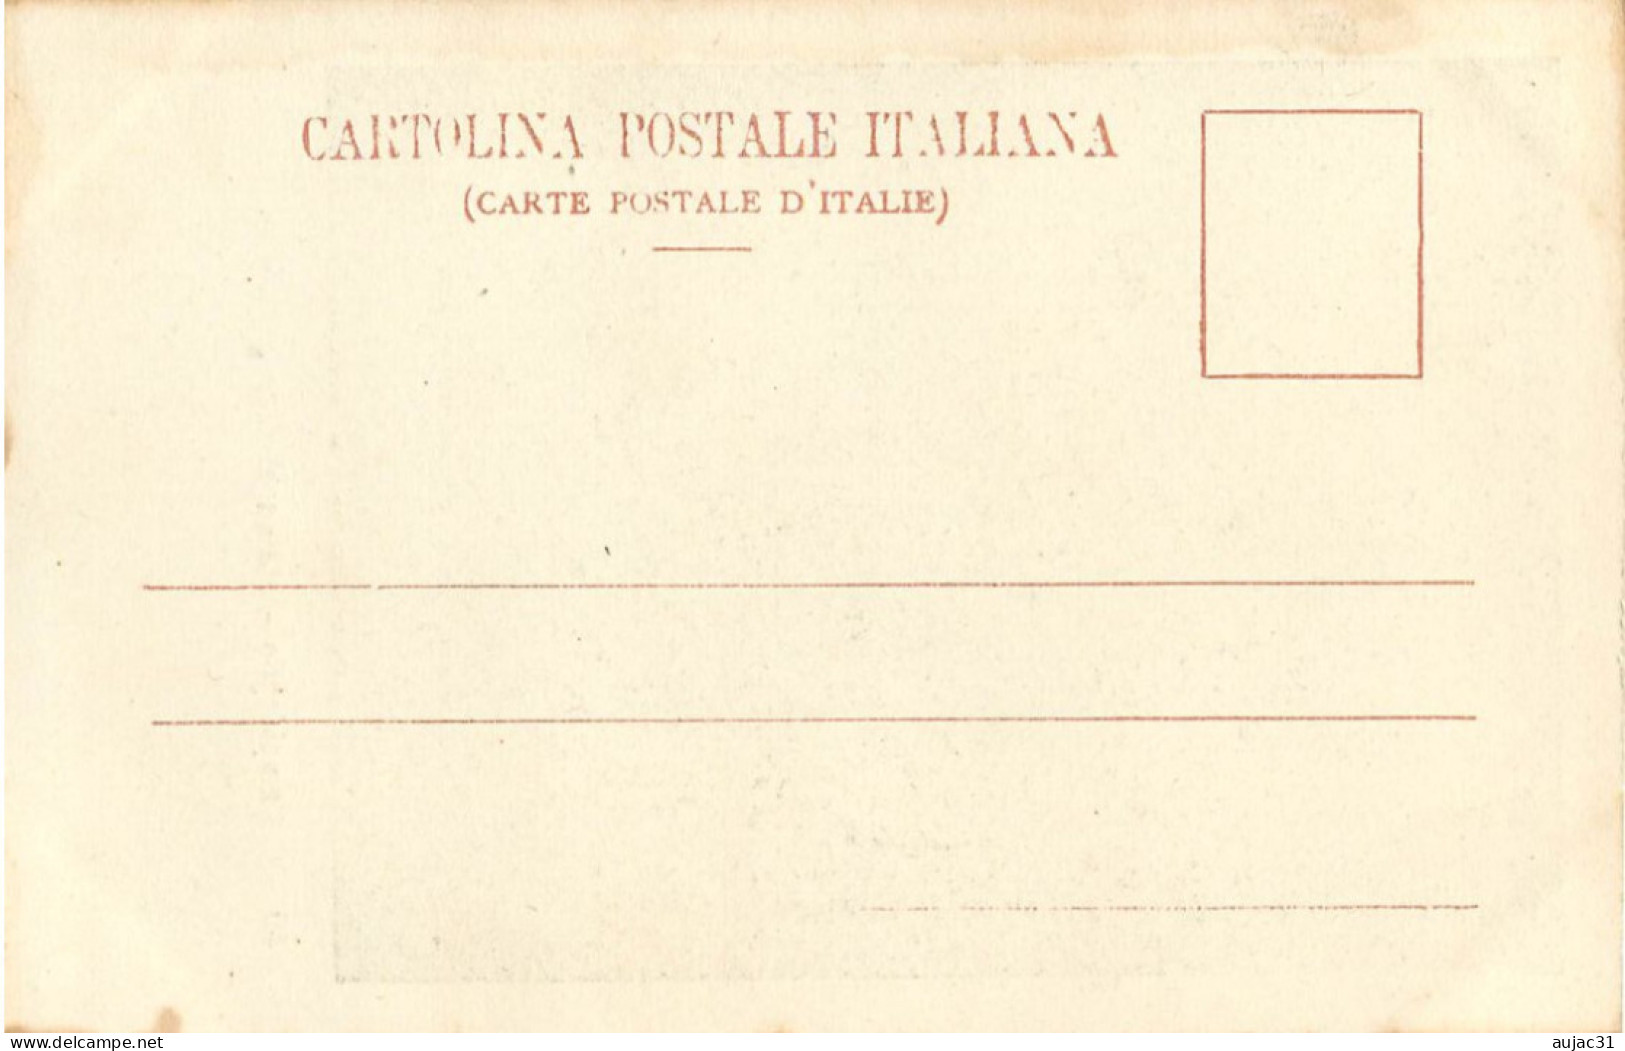 Italie - Italy - Italia - Lazio - Rome - Roma - Lots - Lot de 50 cartes - Série complète